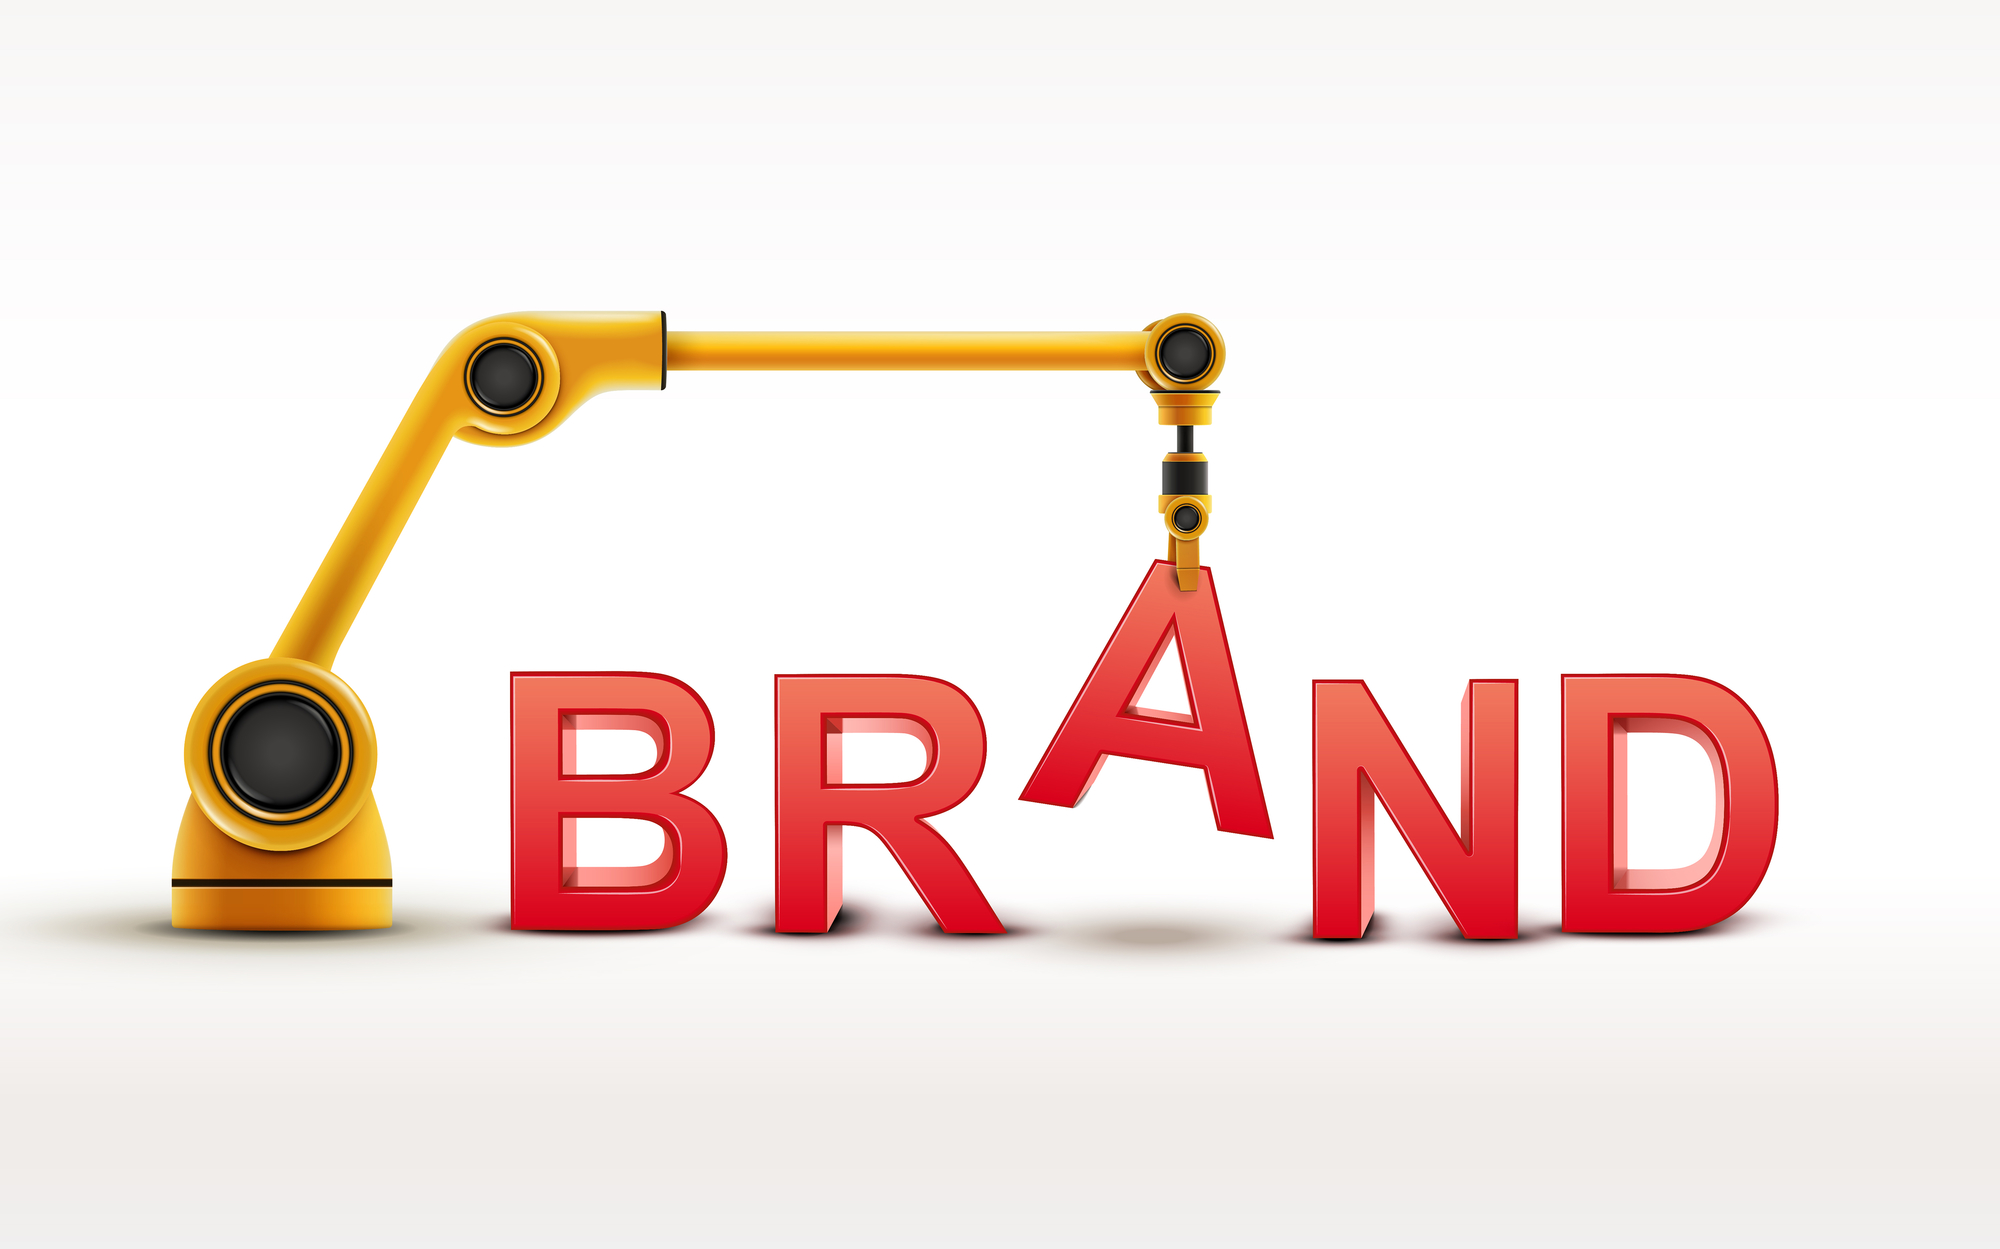 Brand start. Сильный бренд картинка. Brand #1. Brand Word. Слово brands.